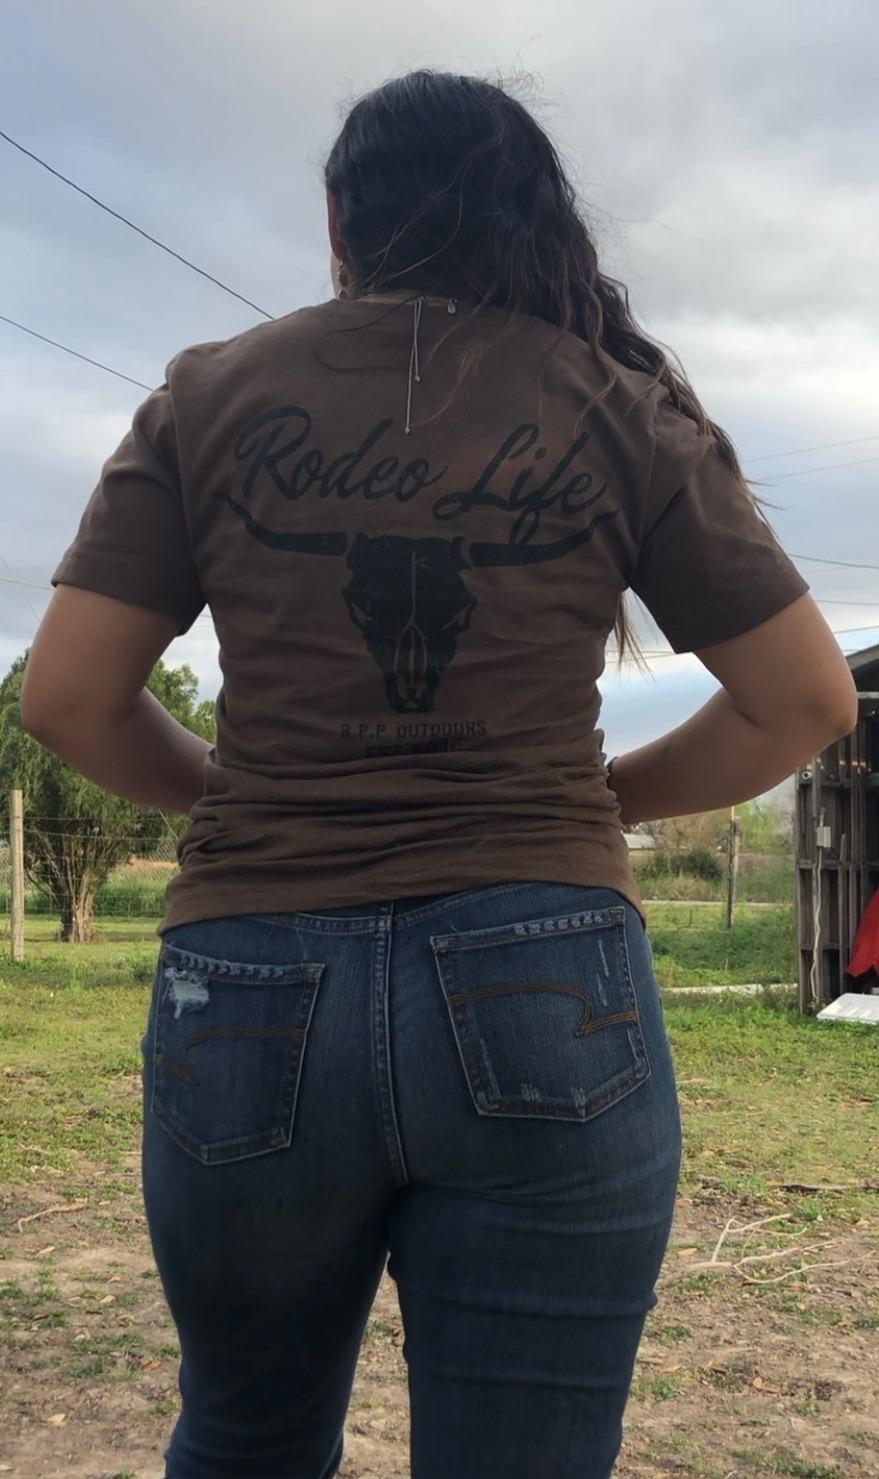 Rodeo Life Tee backside of shirt